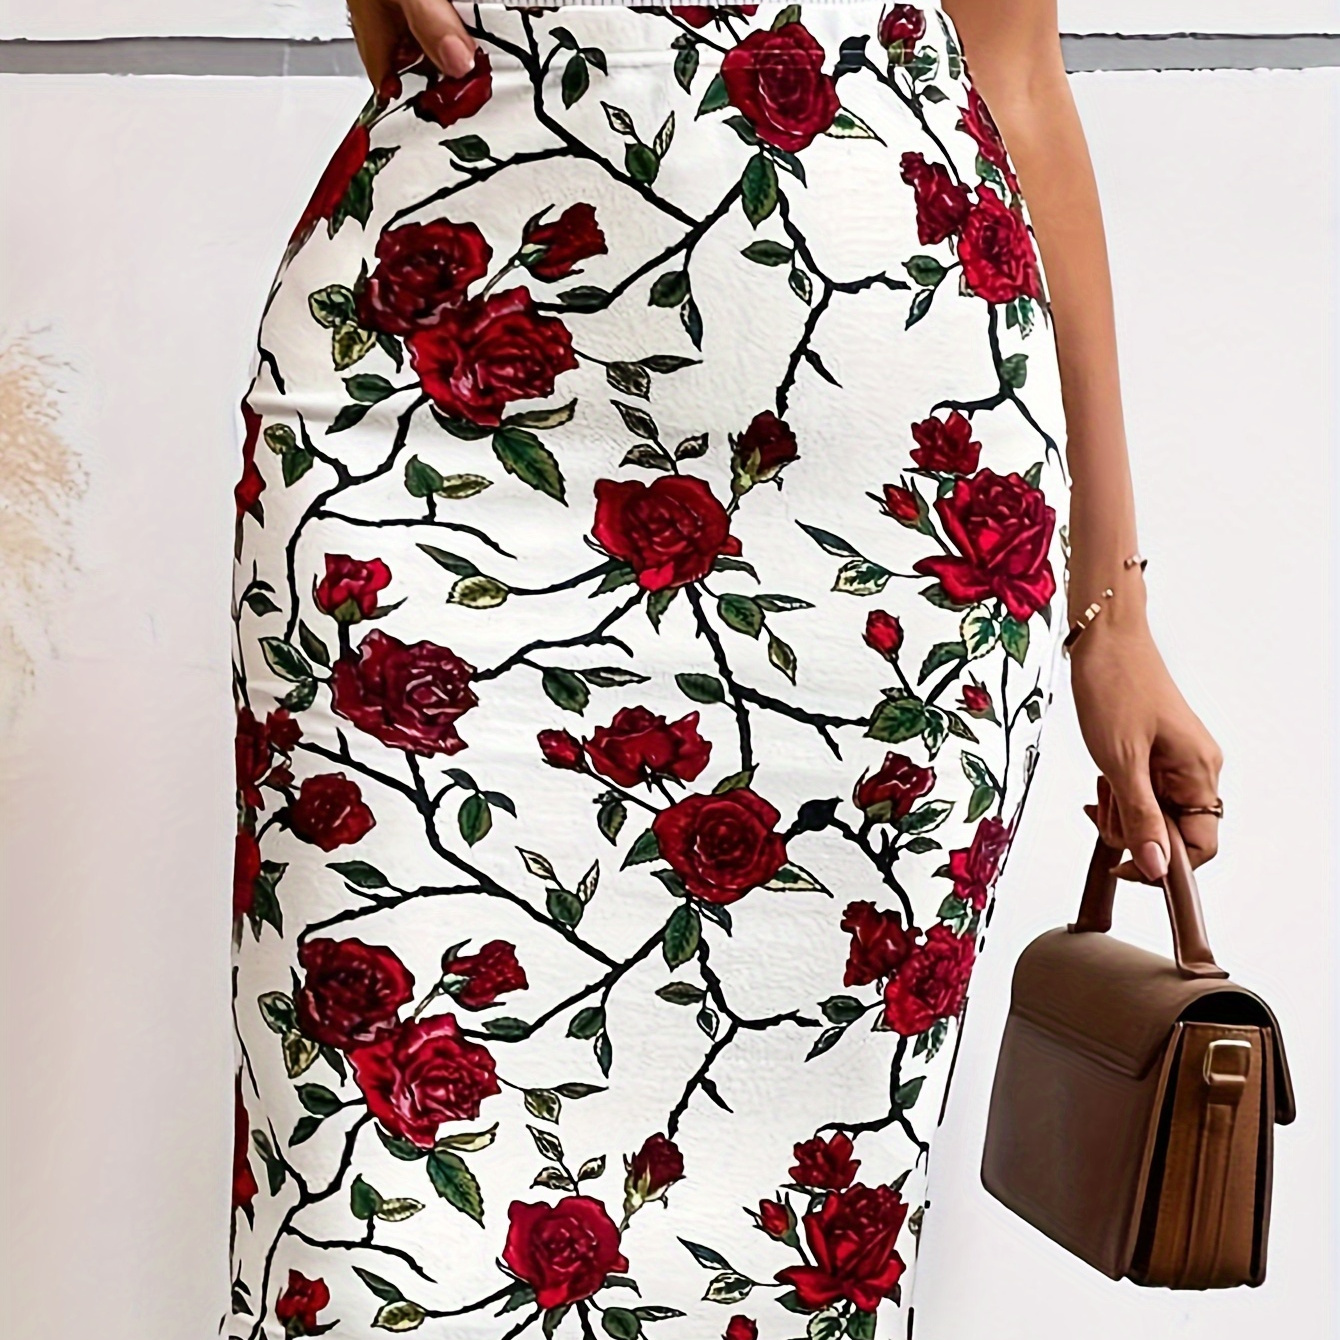 

Floral Print High Waist Bodycon Skirt, Elegant Knee Length Pencil Skirt, Women's Clothing